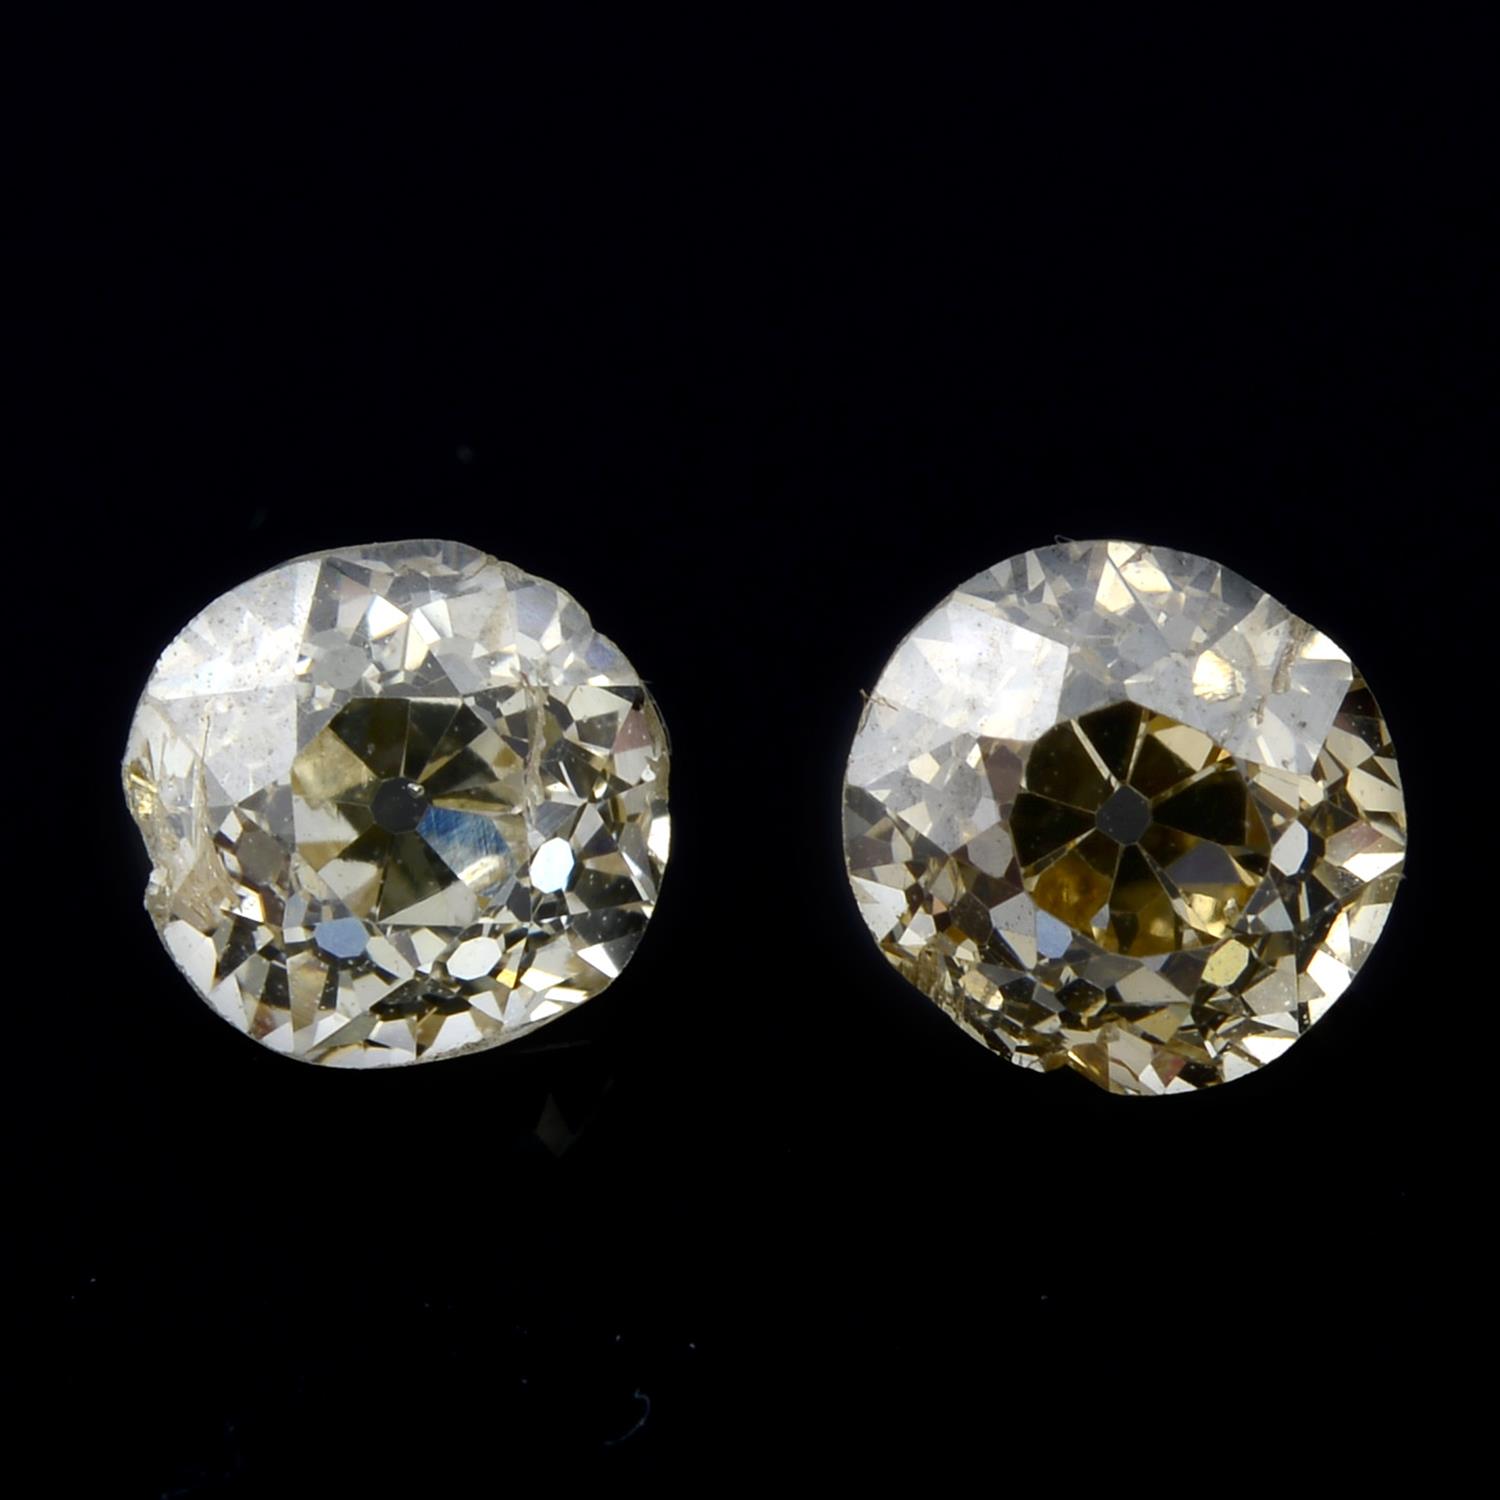 Two vari-shape diamonds, weighing 0.92ct